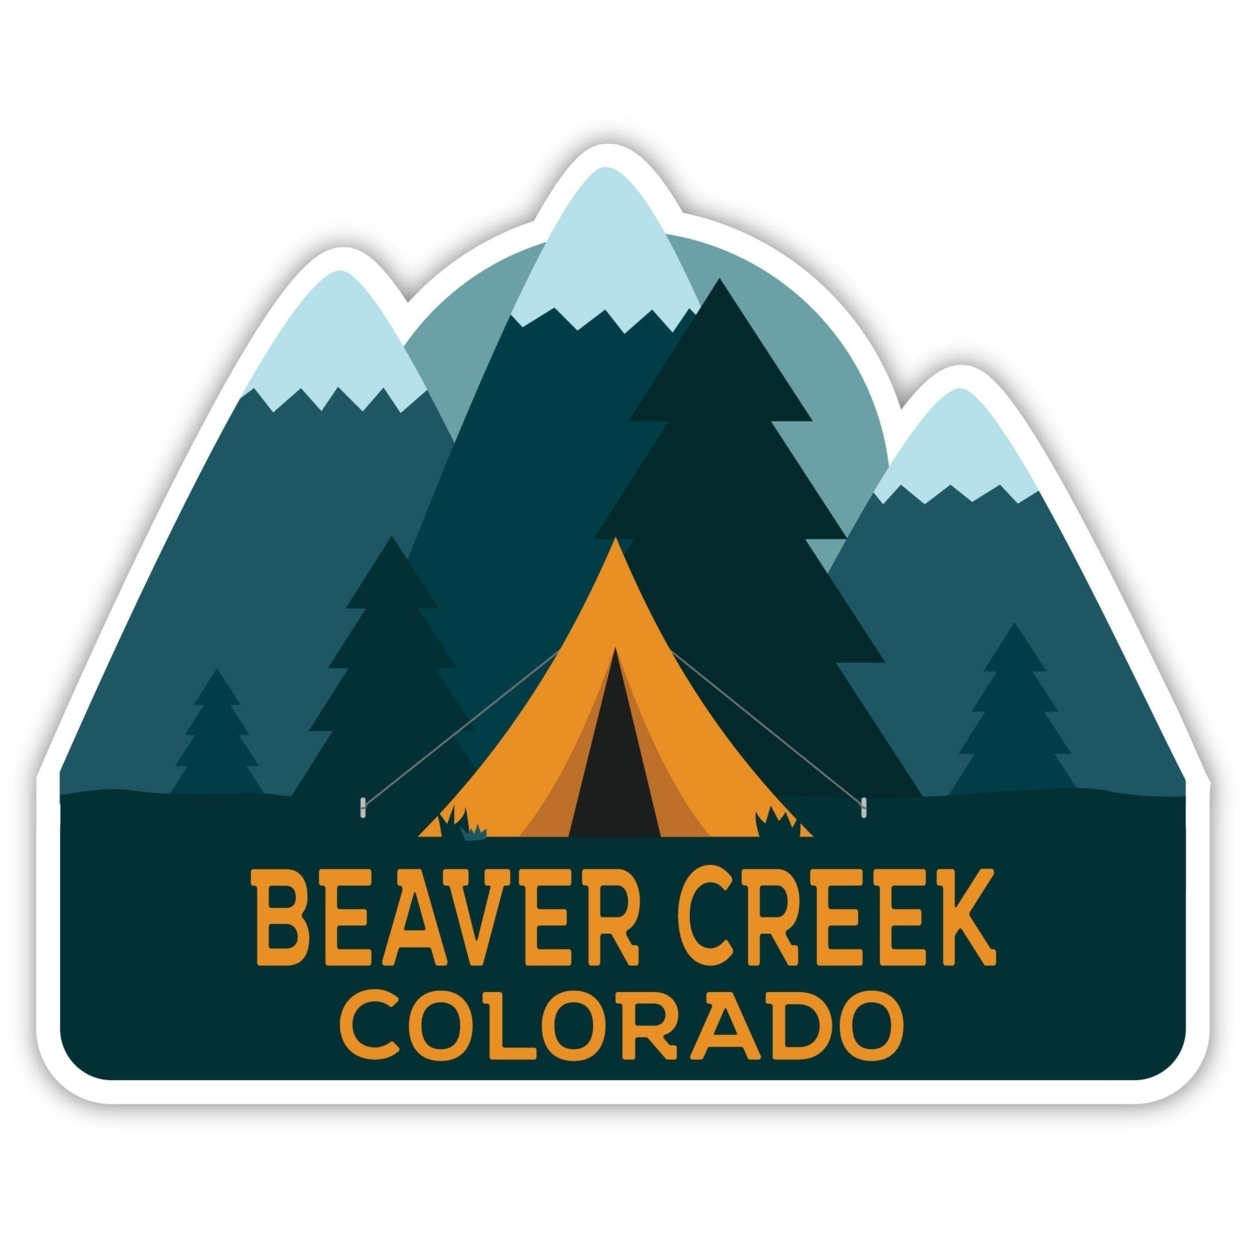 Beaver Creek Colorado Souvenir Decorative Stickers (Choose Theme And Size) - 4-Pack, 4-Inch, Tent